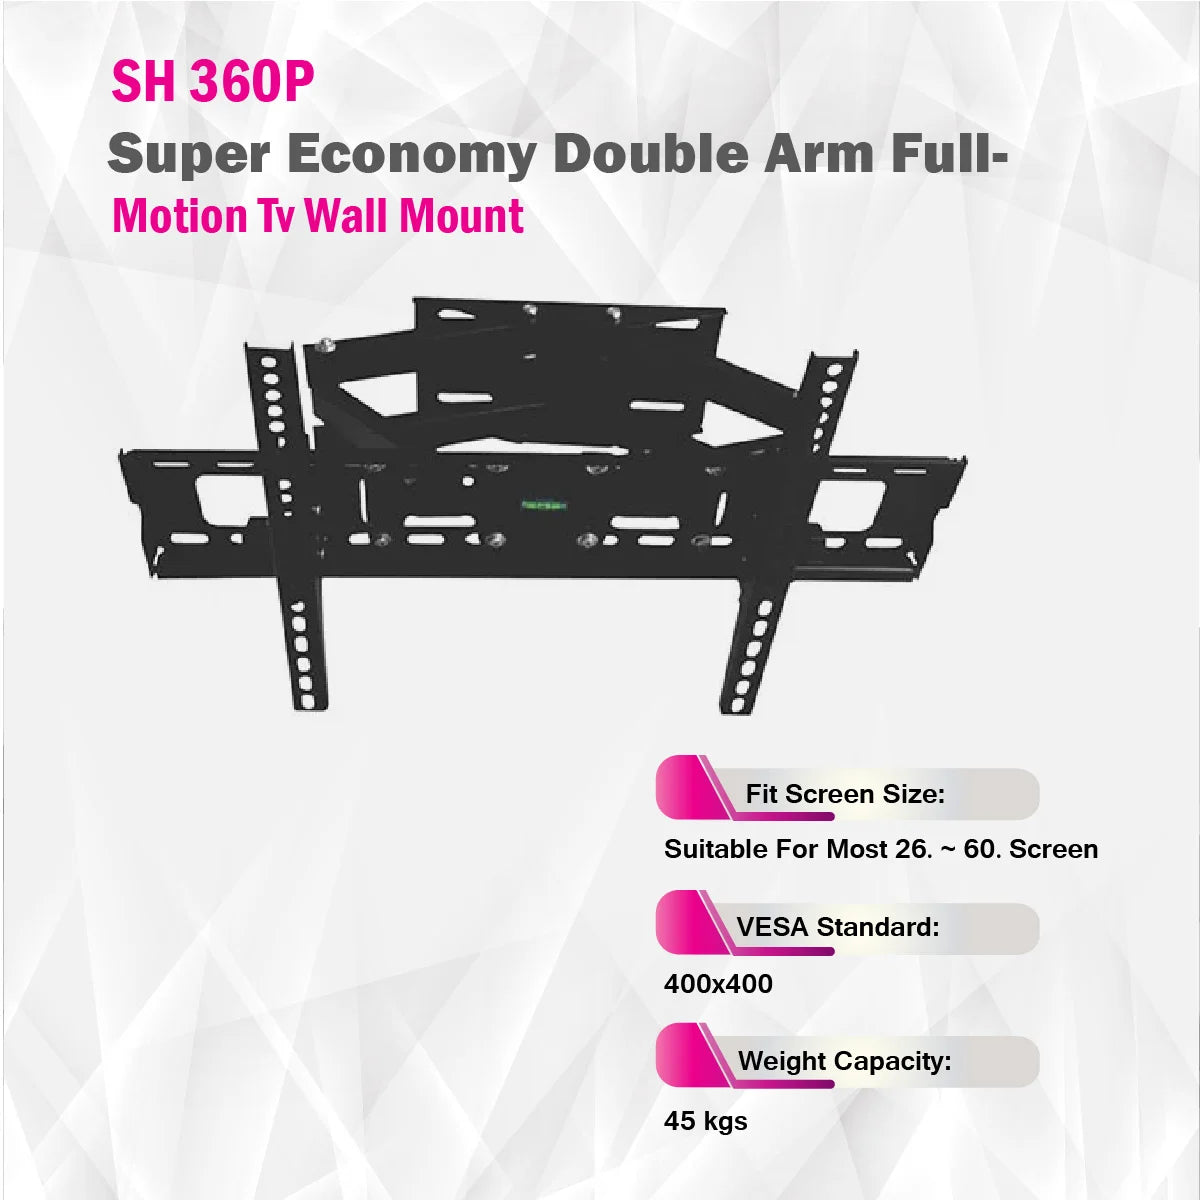 SkillTech - SH 360P - Super Economy Double Arm Full-Motion Tv Wall Mount